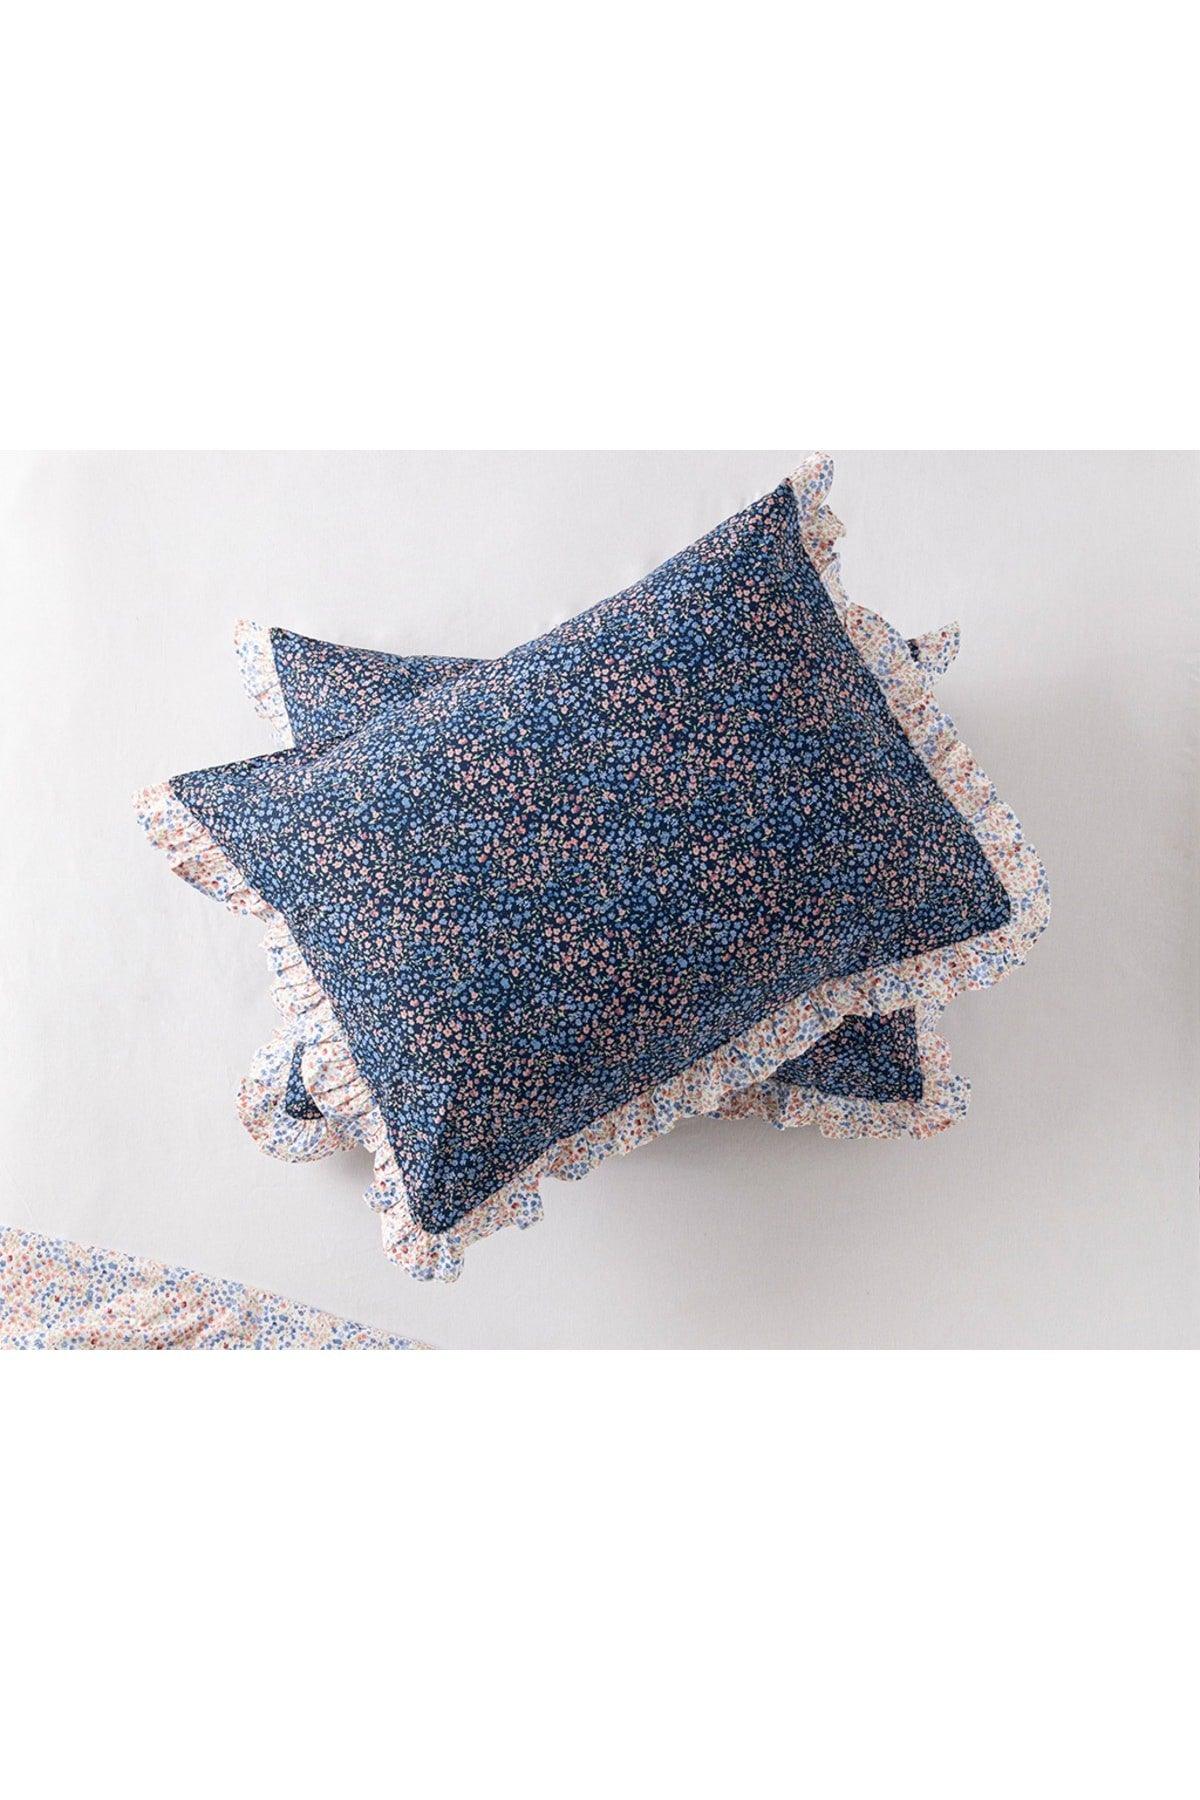 Millefleur Cotton 2-Pack Pillowcase 50x70 Cm Navy Blue - Swordslife